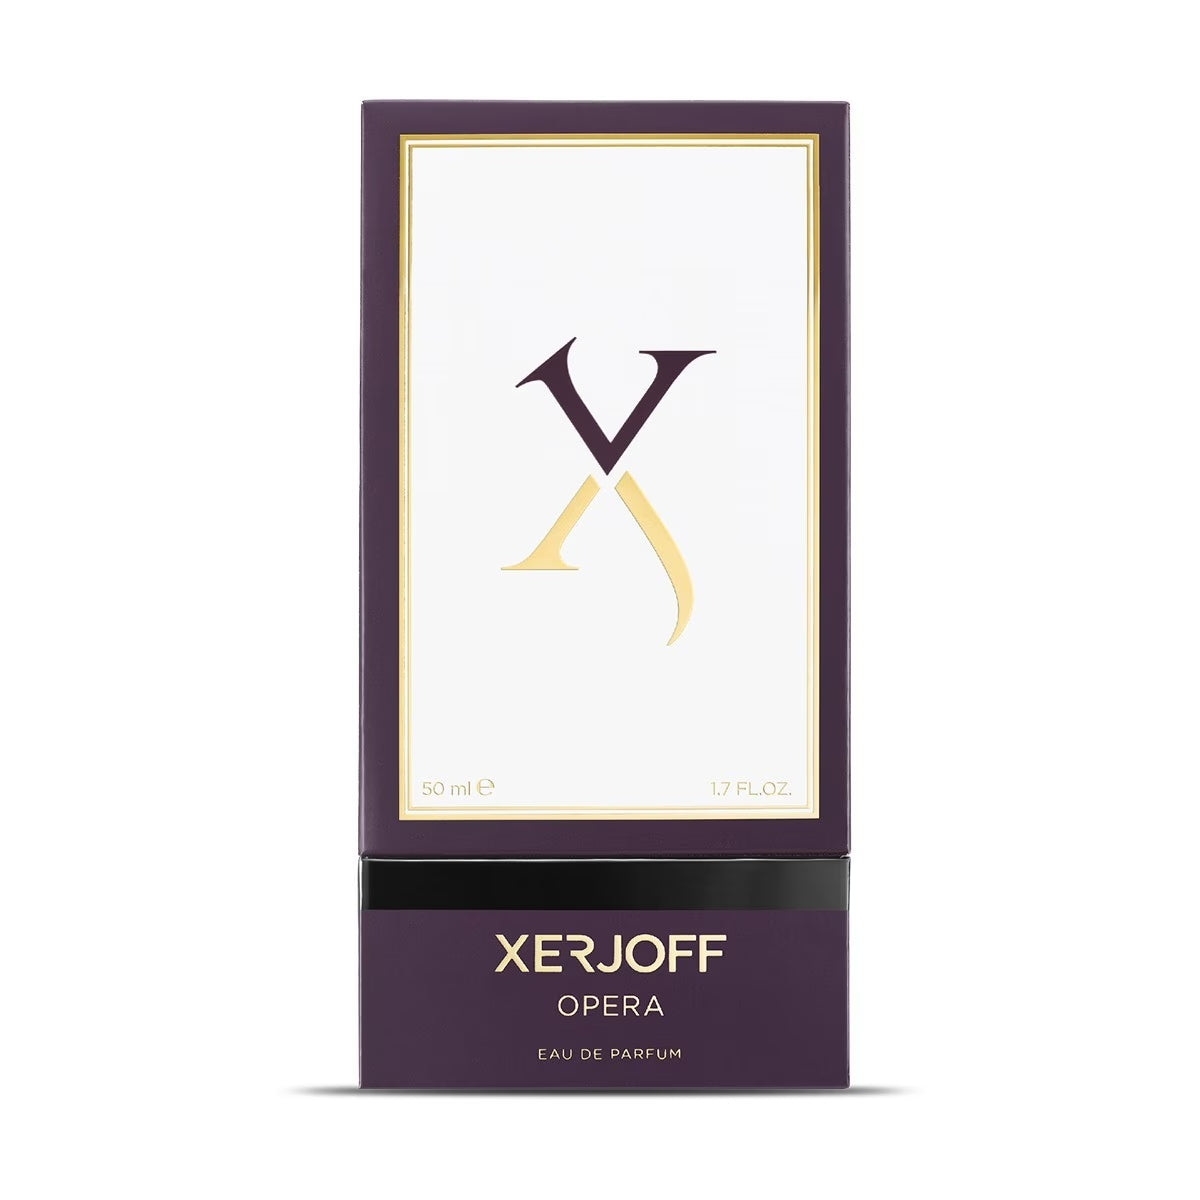 Xerjoff V Opera Eau de Parfum Unisexparfüm Probe Abfüllung Tester Parfüm 0,5 ml 1 ml 2 ml 5 ml